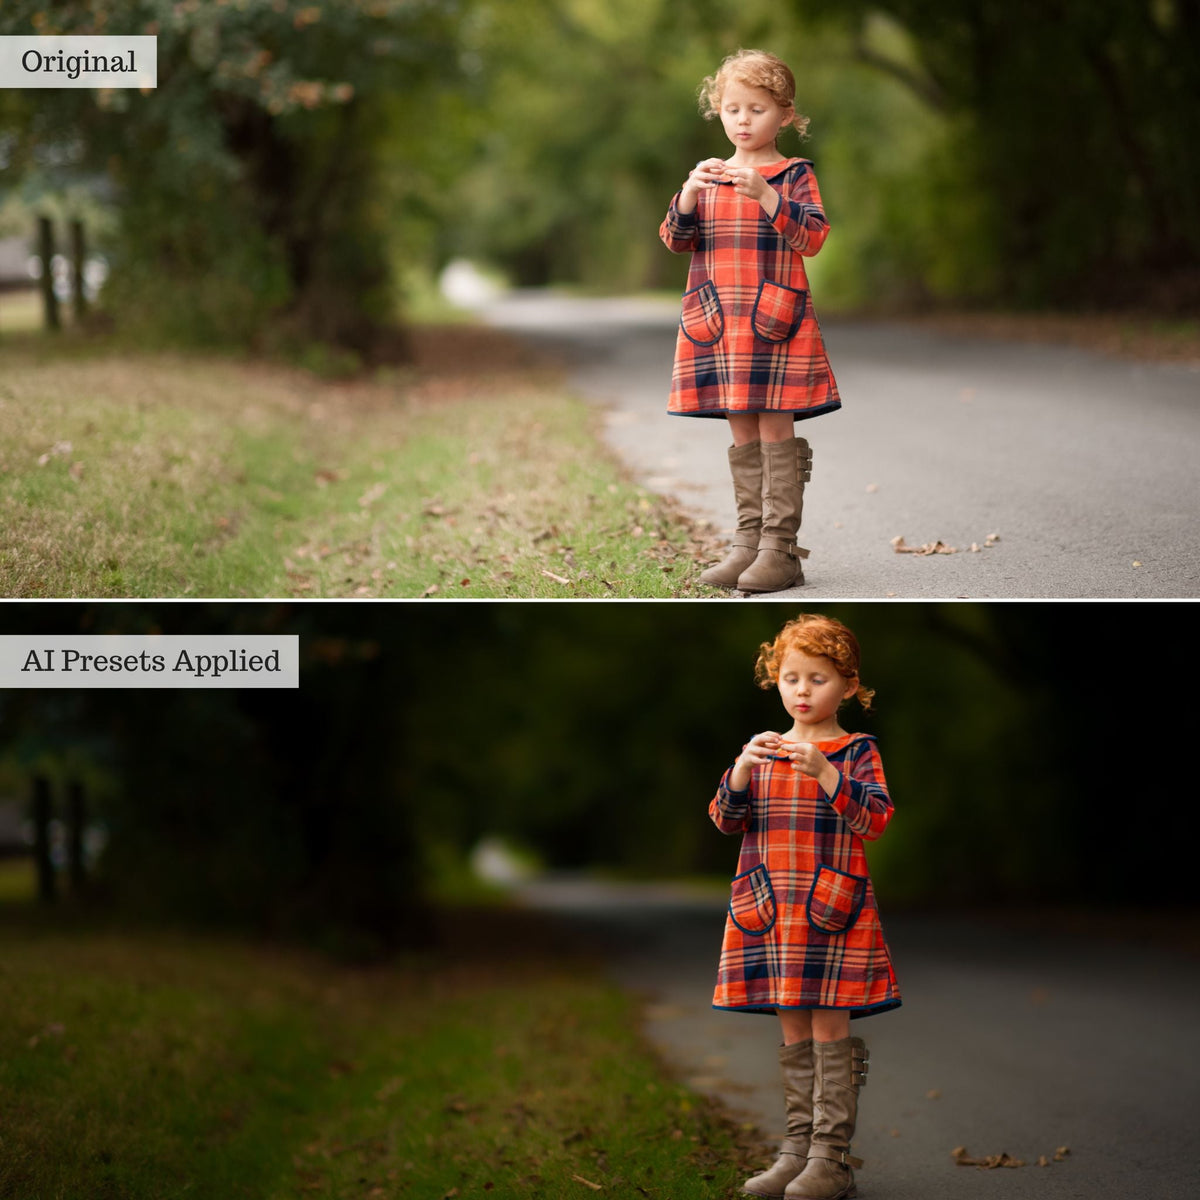 Luxe Portrait Artificial Intelligence (AI) Retouch Toolkit Lightroom Presets – Desktop